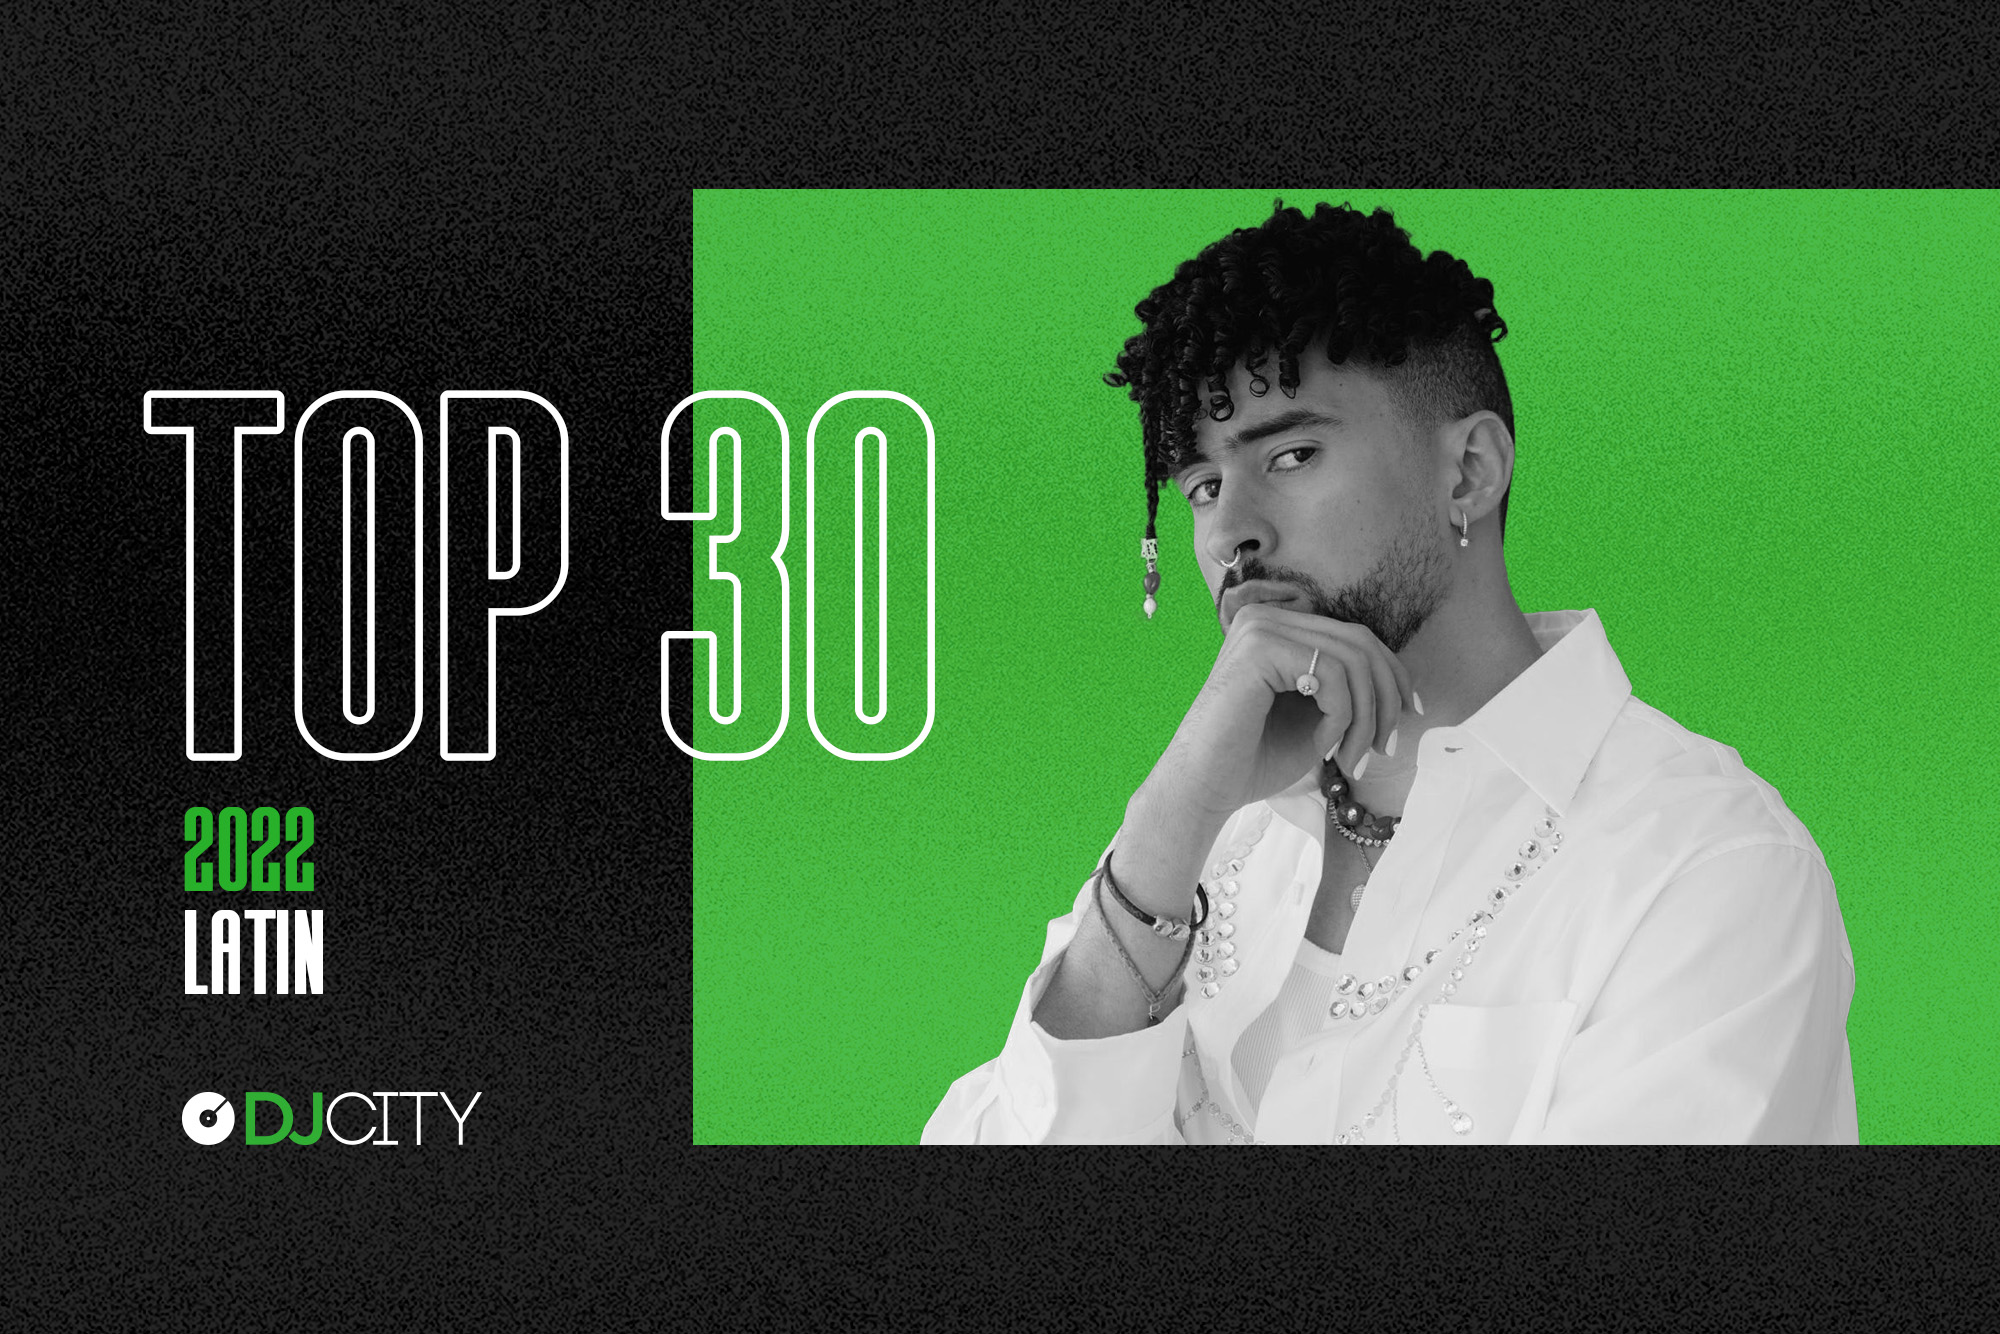 DJcity’s 30 Most Downloaded Latin Tracks of 2022